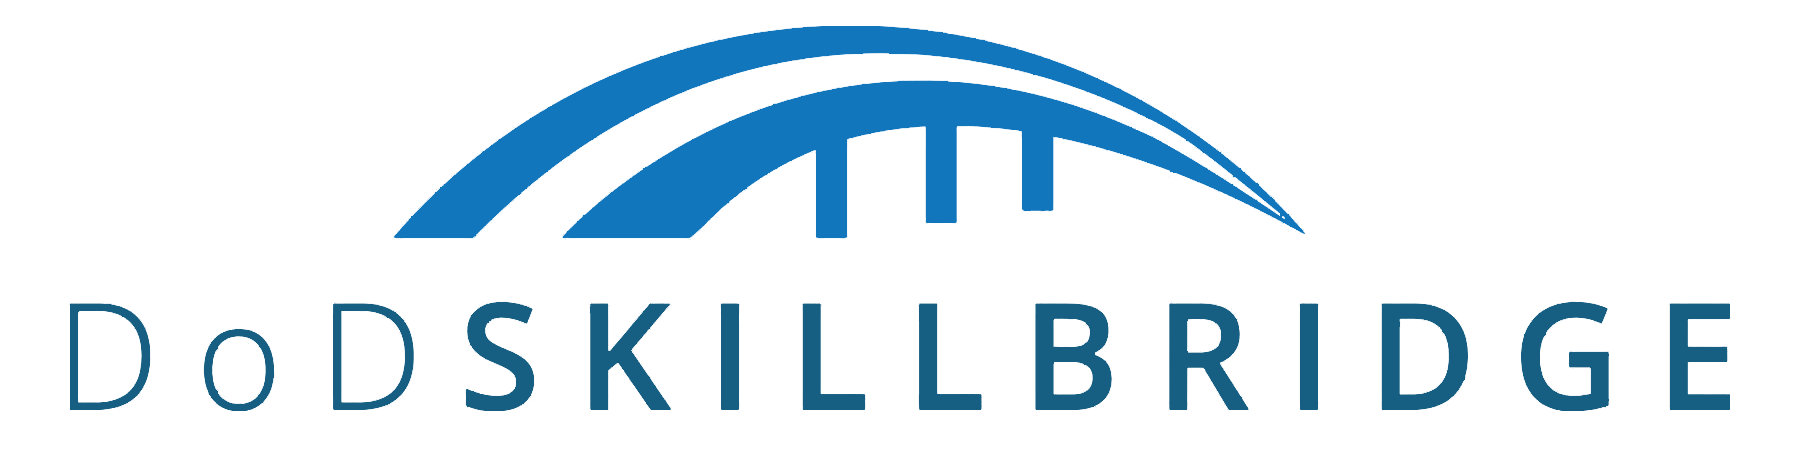 skillbridge-logo